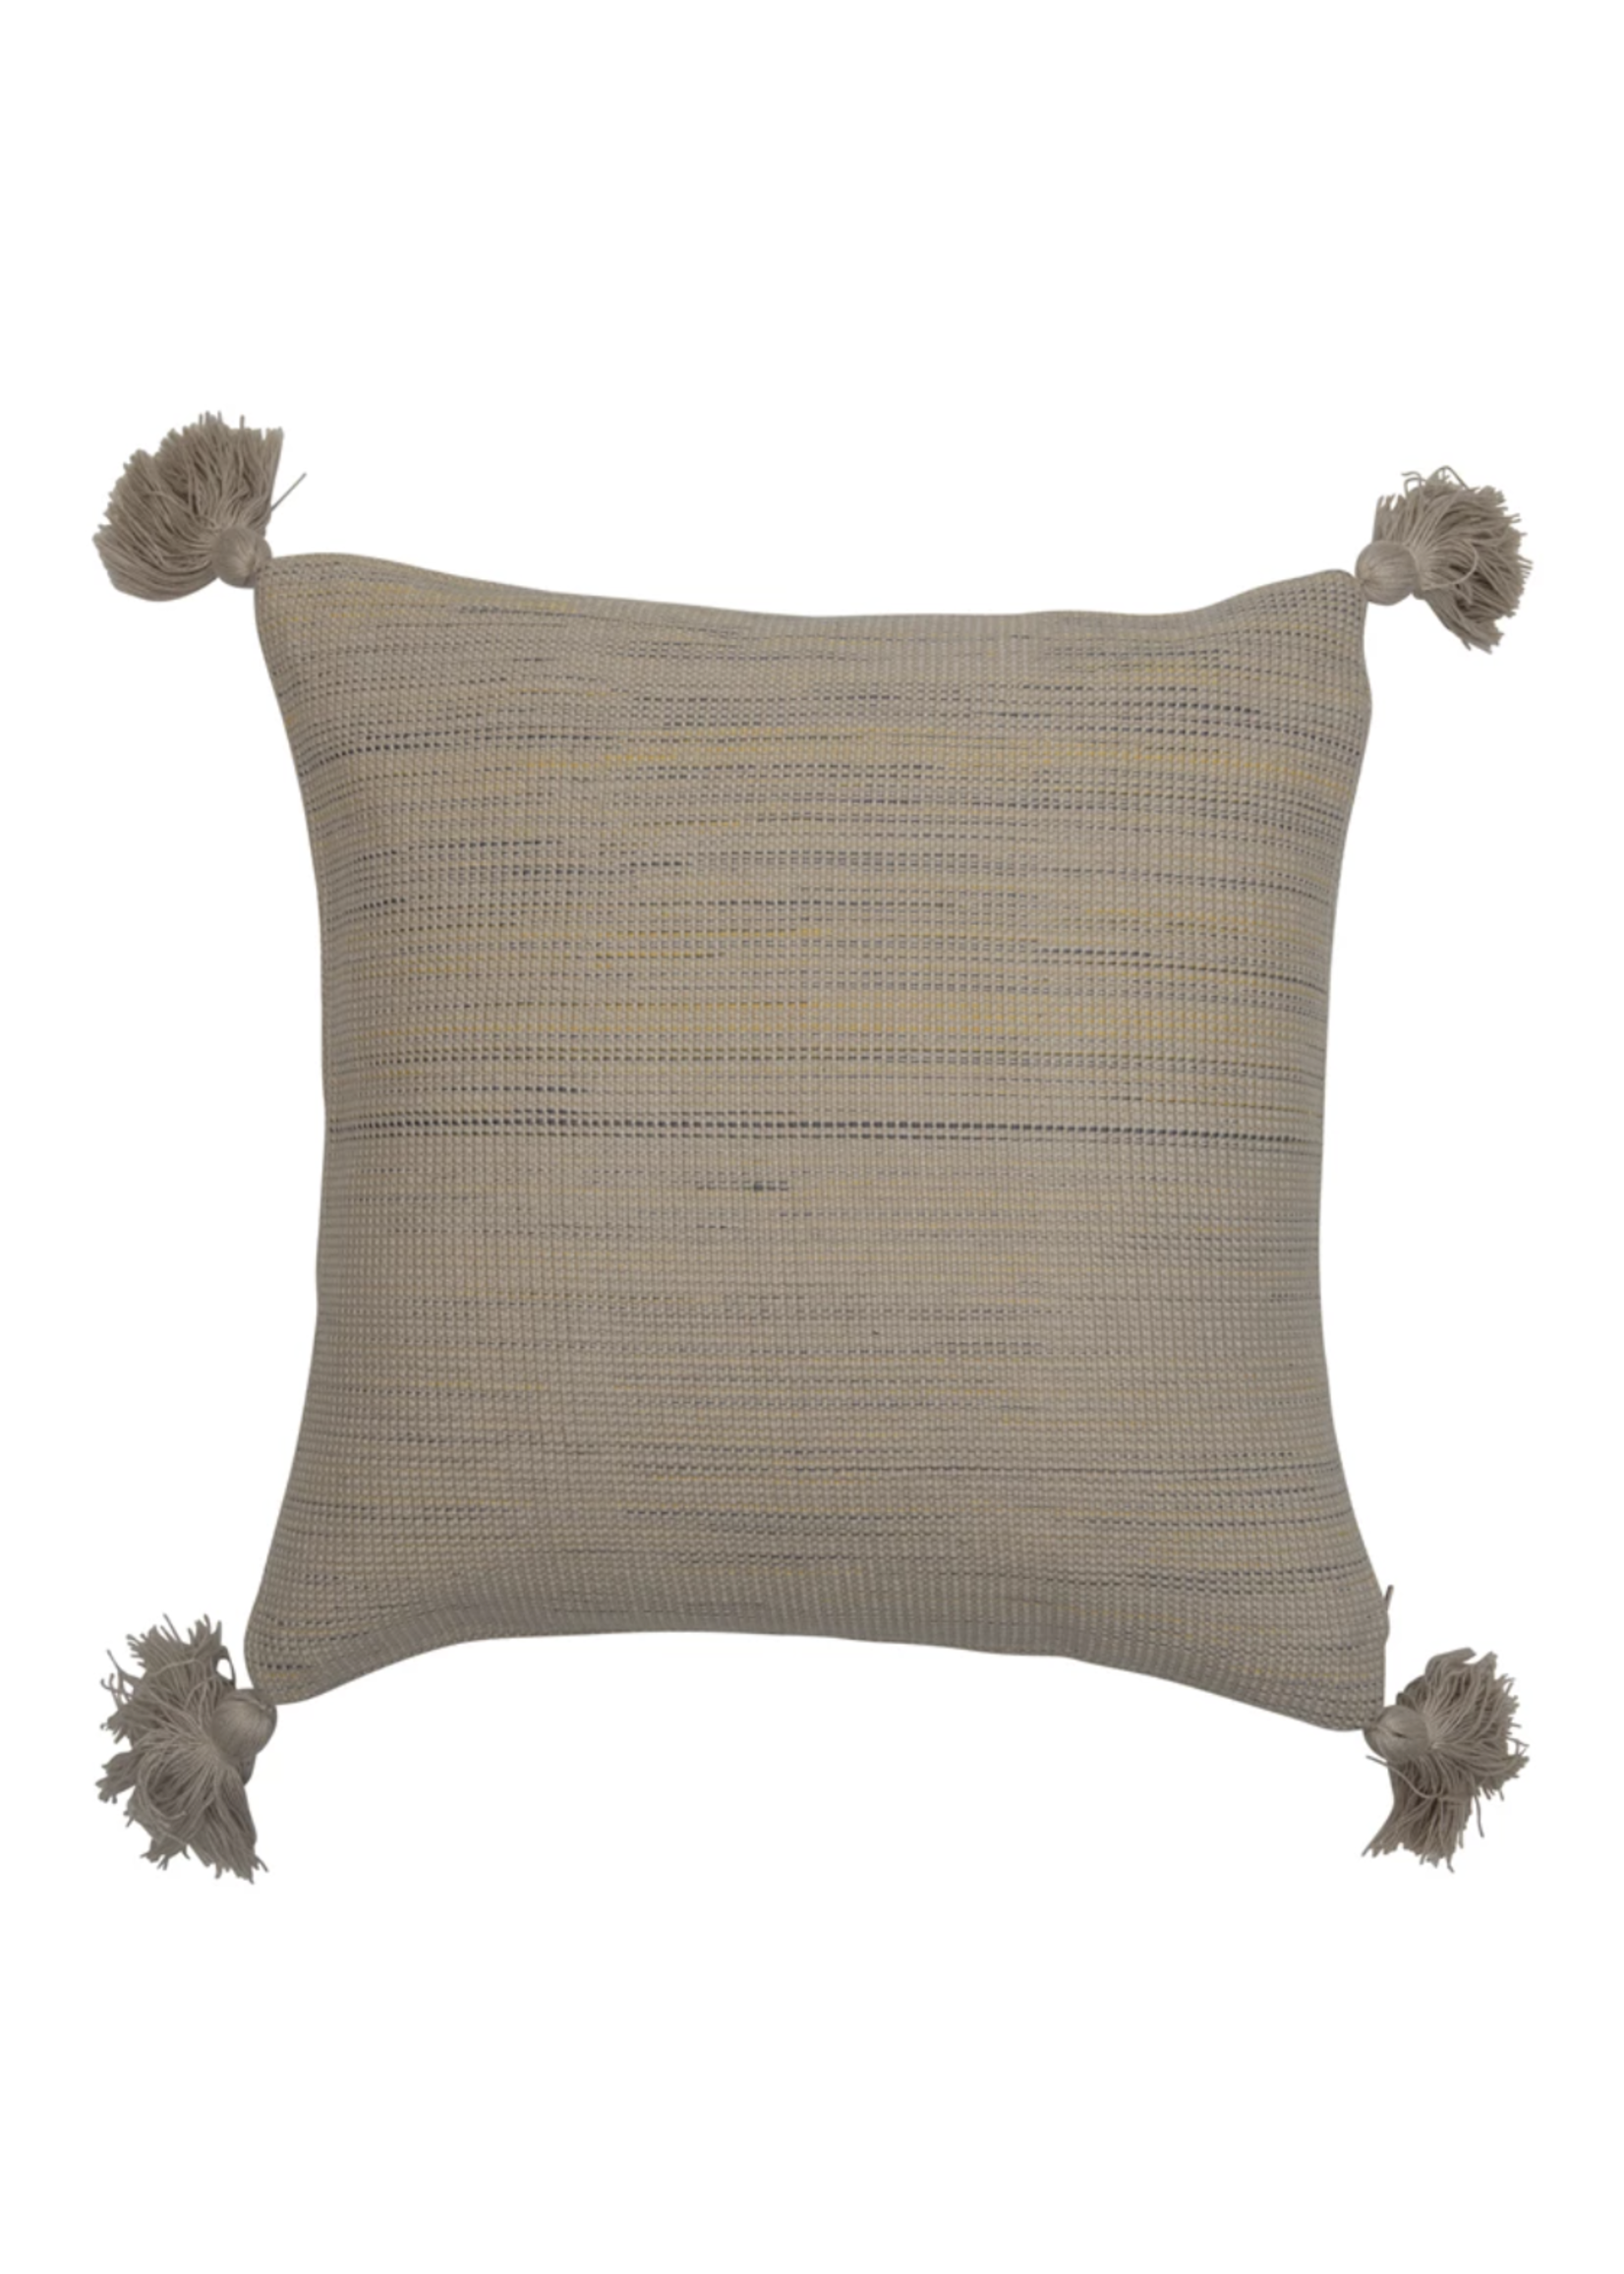 Square Woven Cotton Pillow w/ Tassels, Multi Color